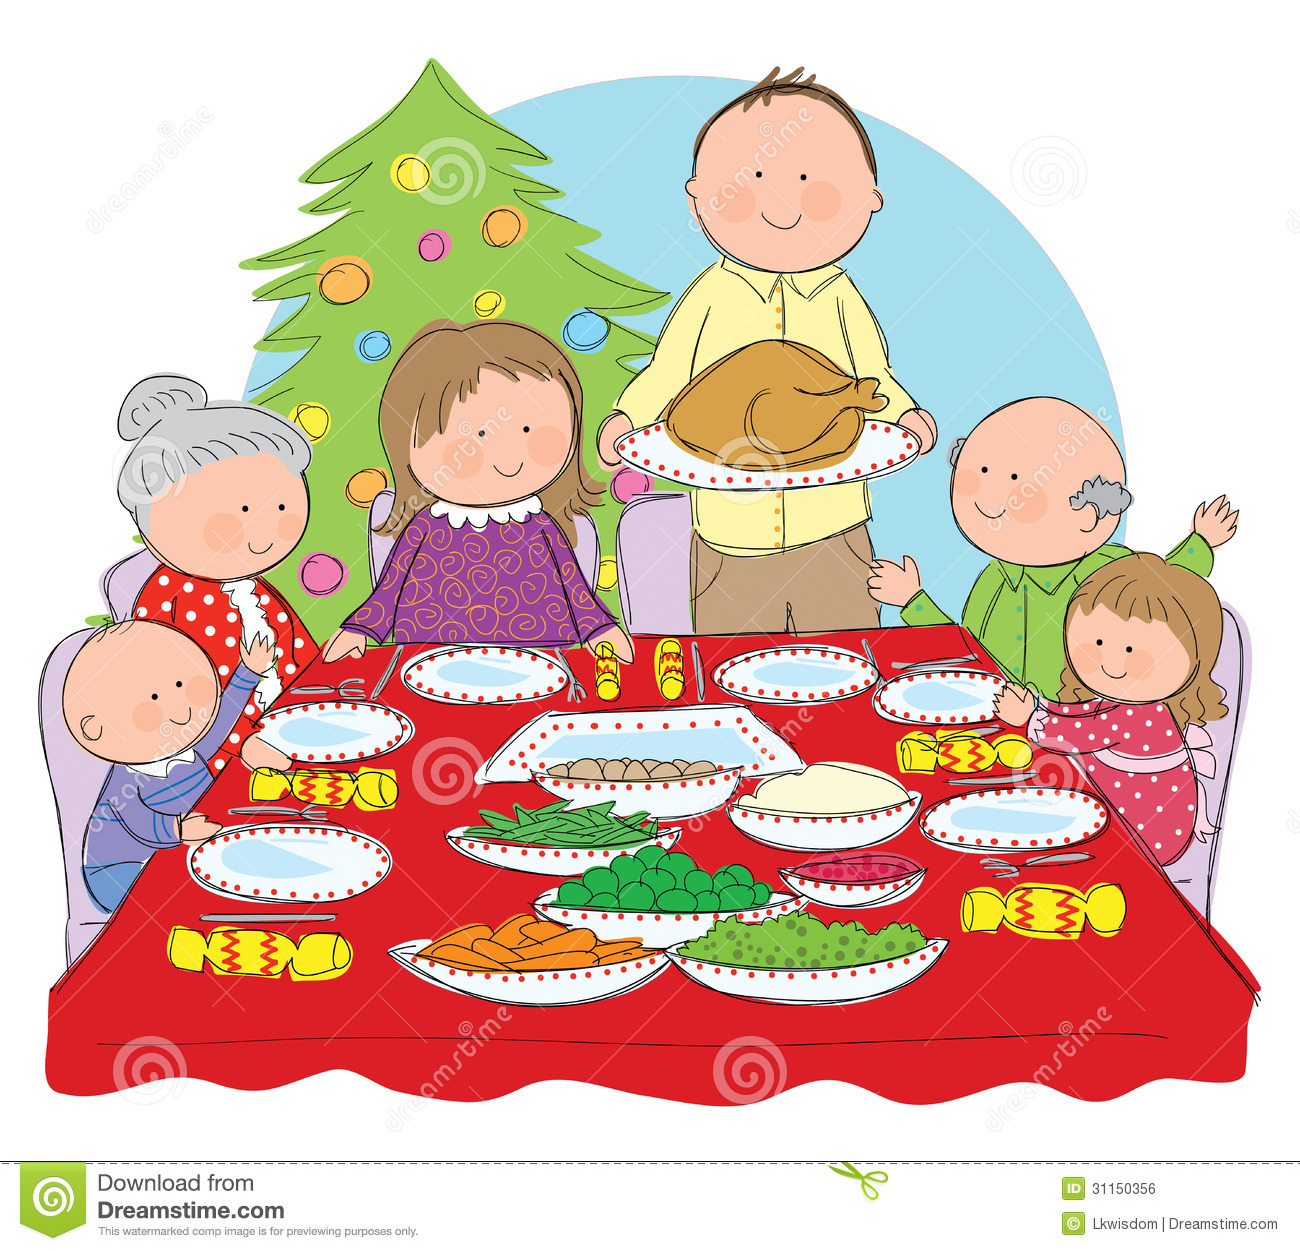 Christmas Dinner Royalty Free Stock Image   Image  31150356